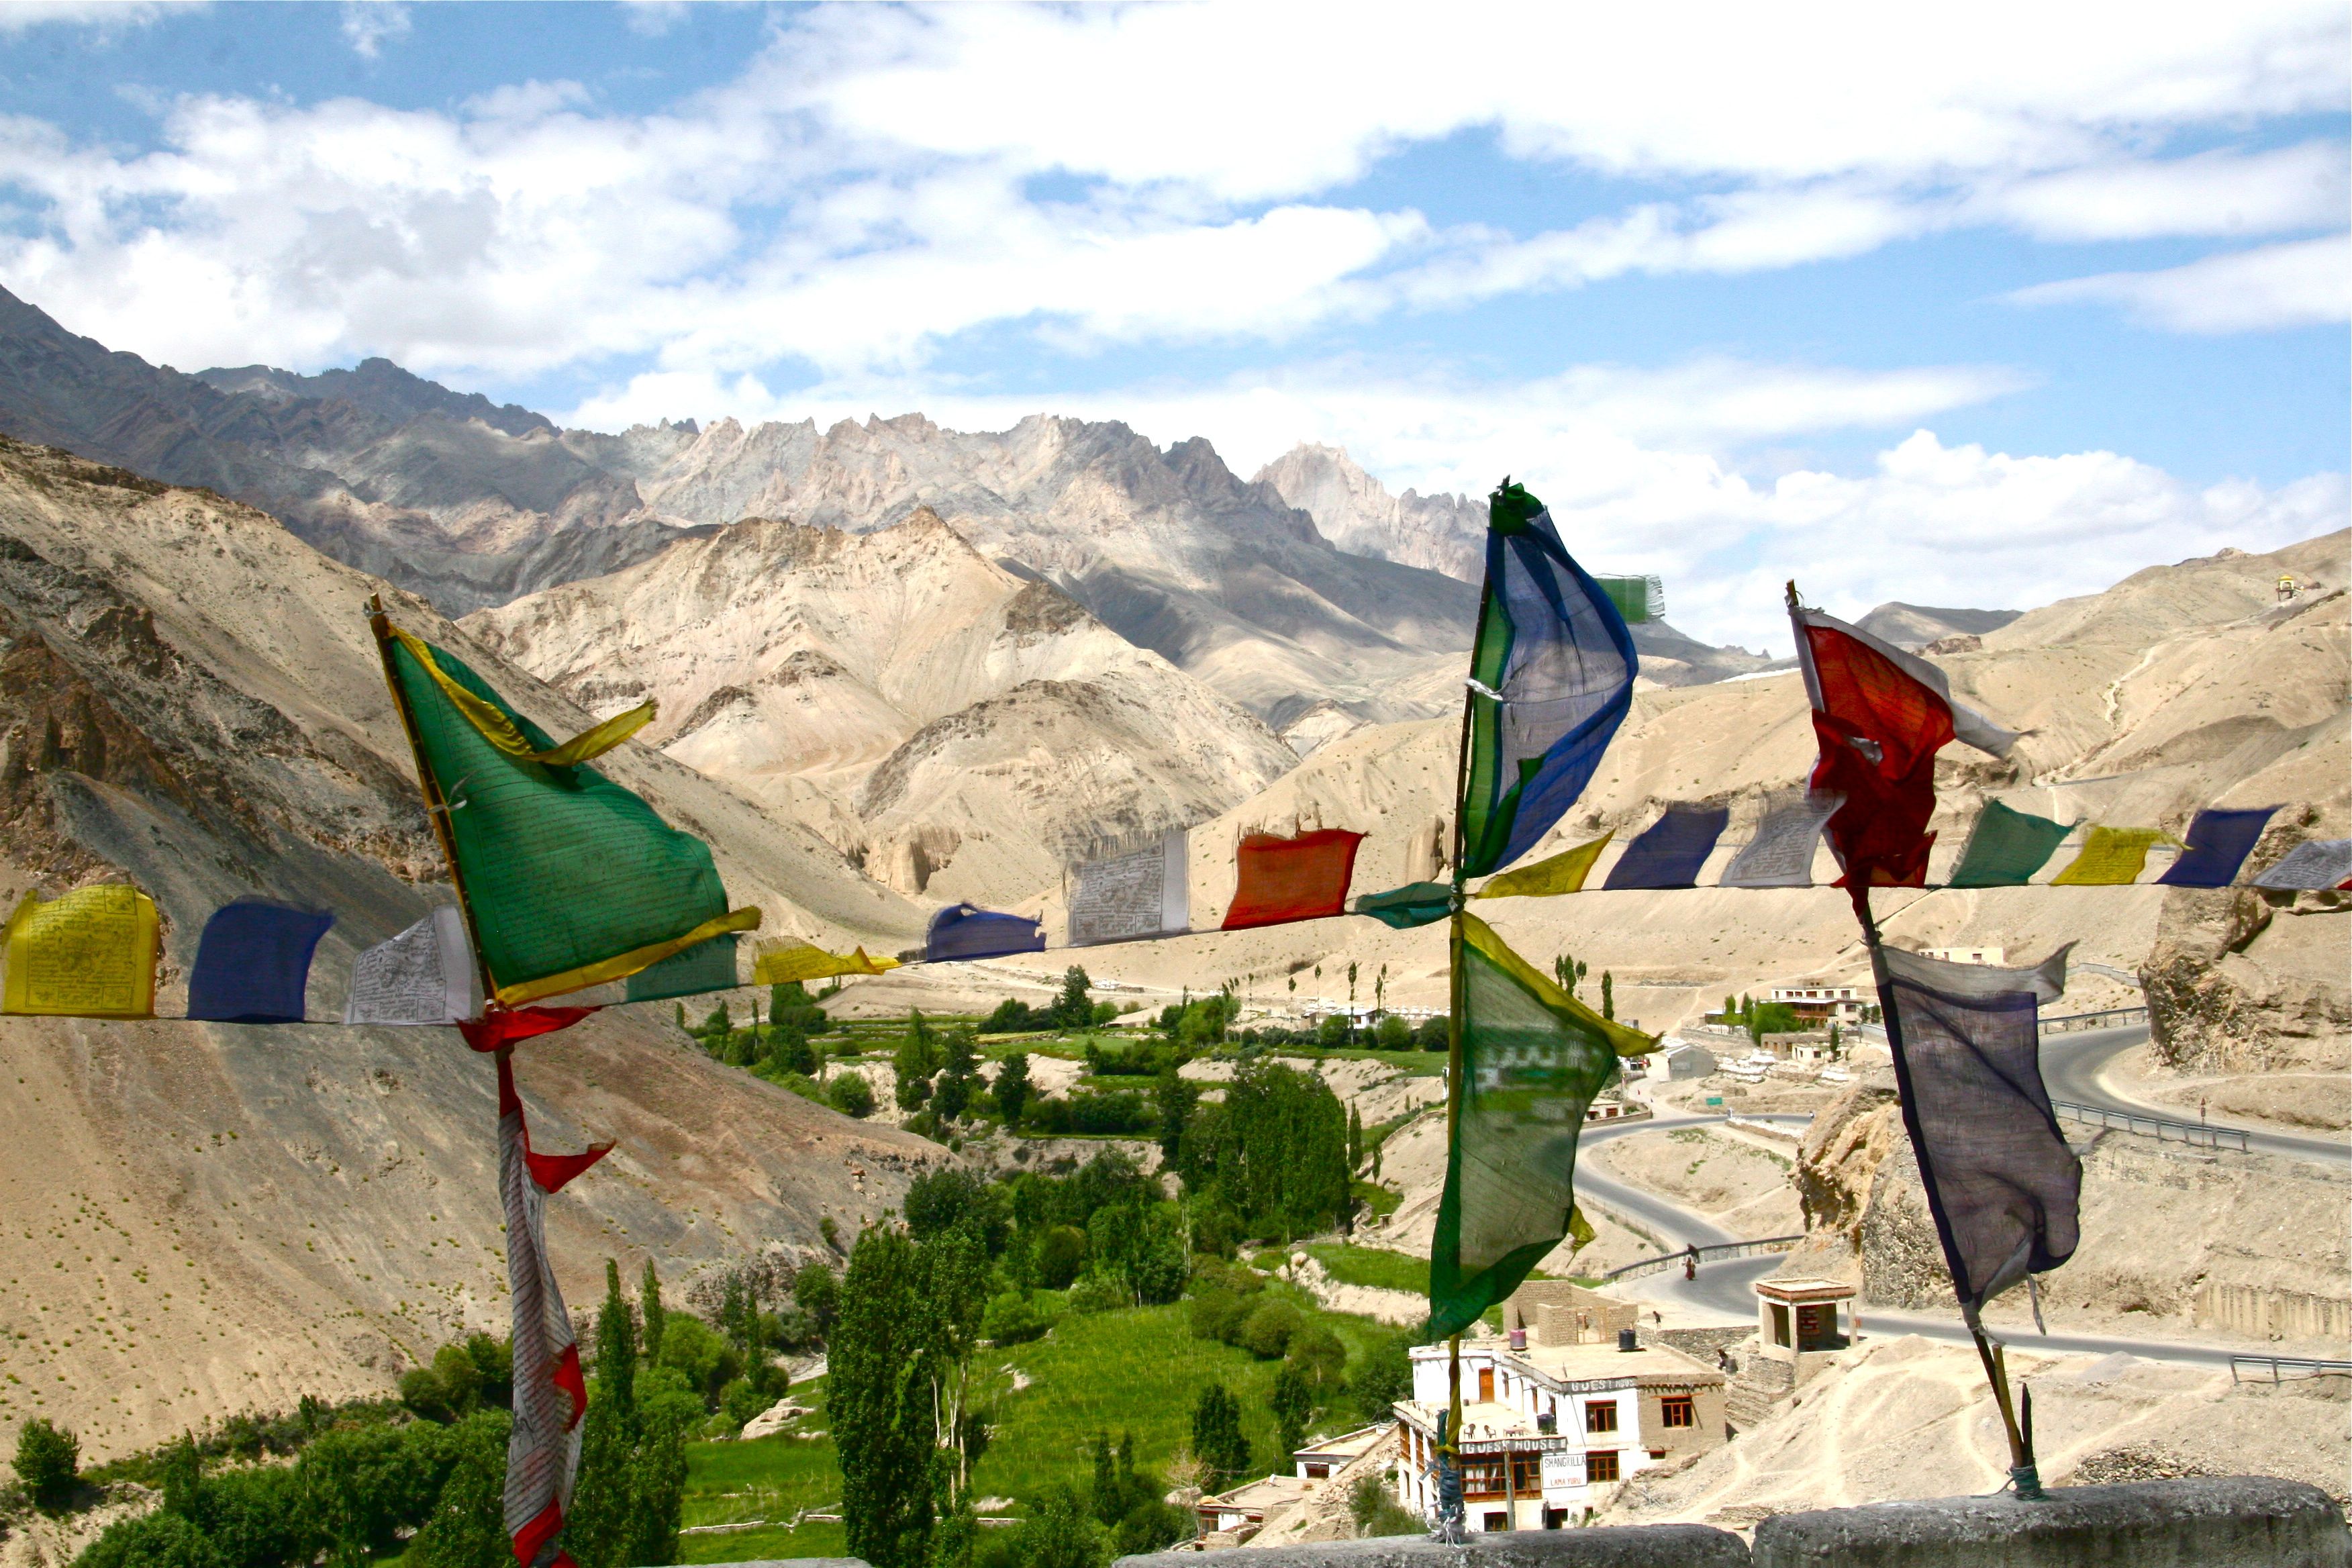 Hemis And Kalachakra Festivals 2014 In Ladakh, India